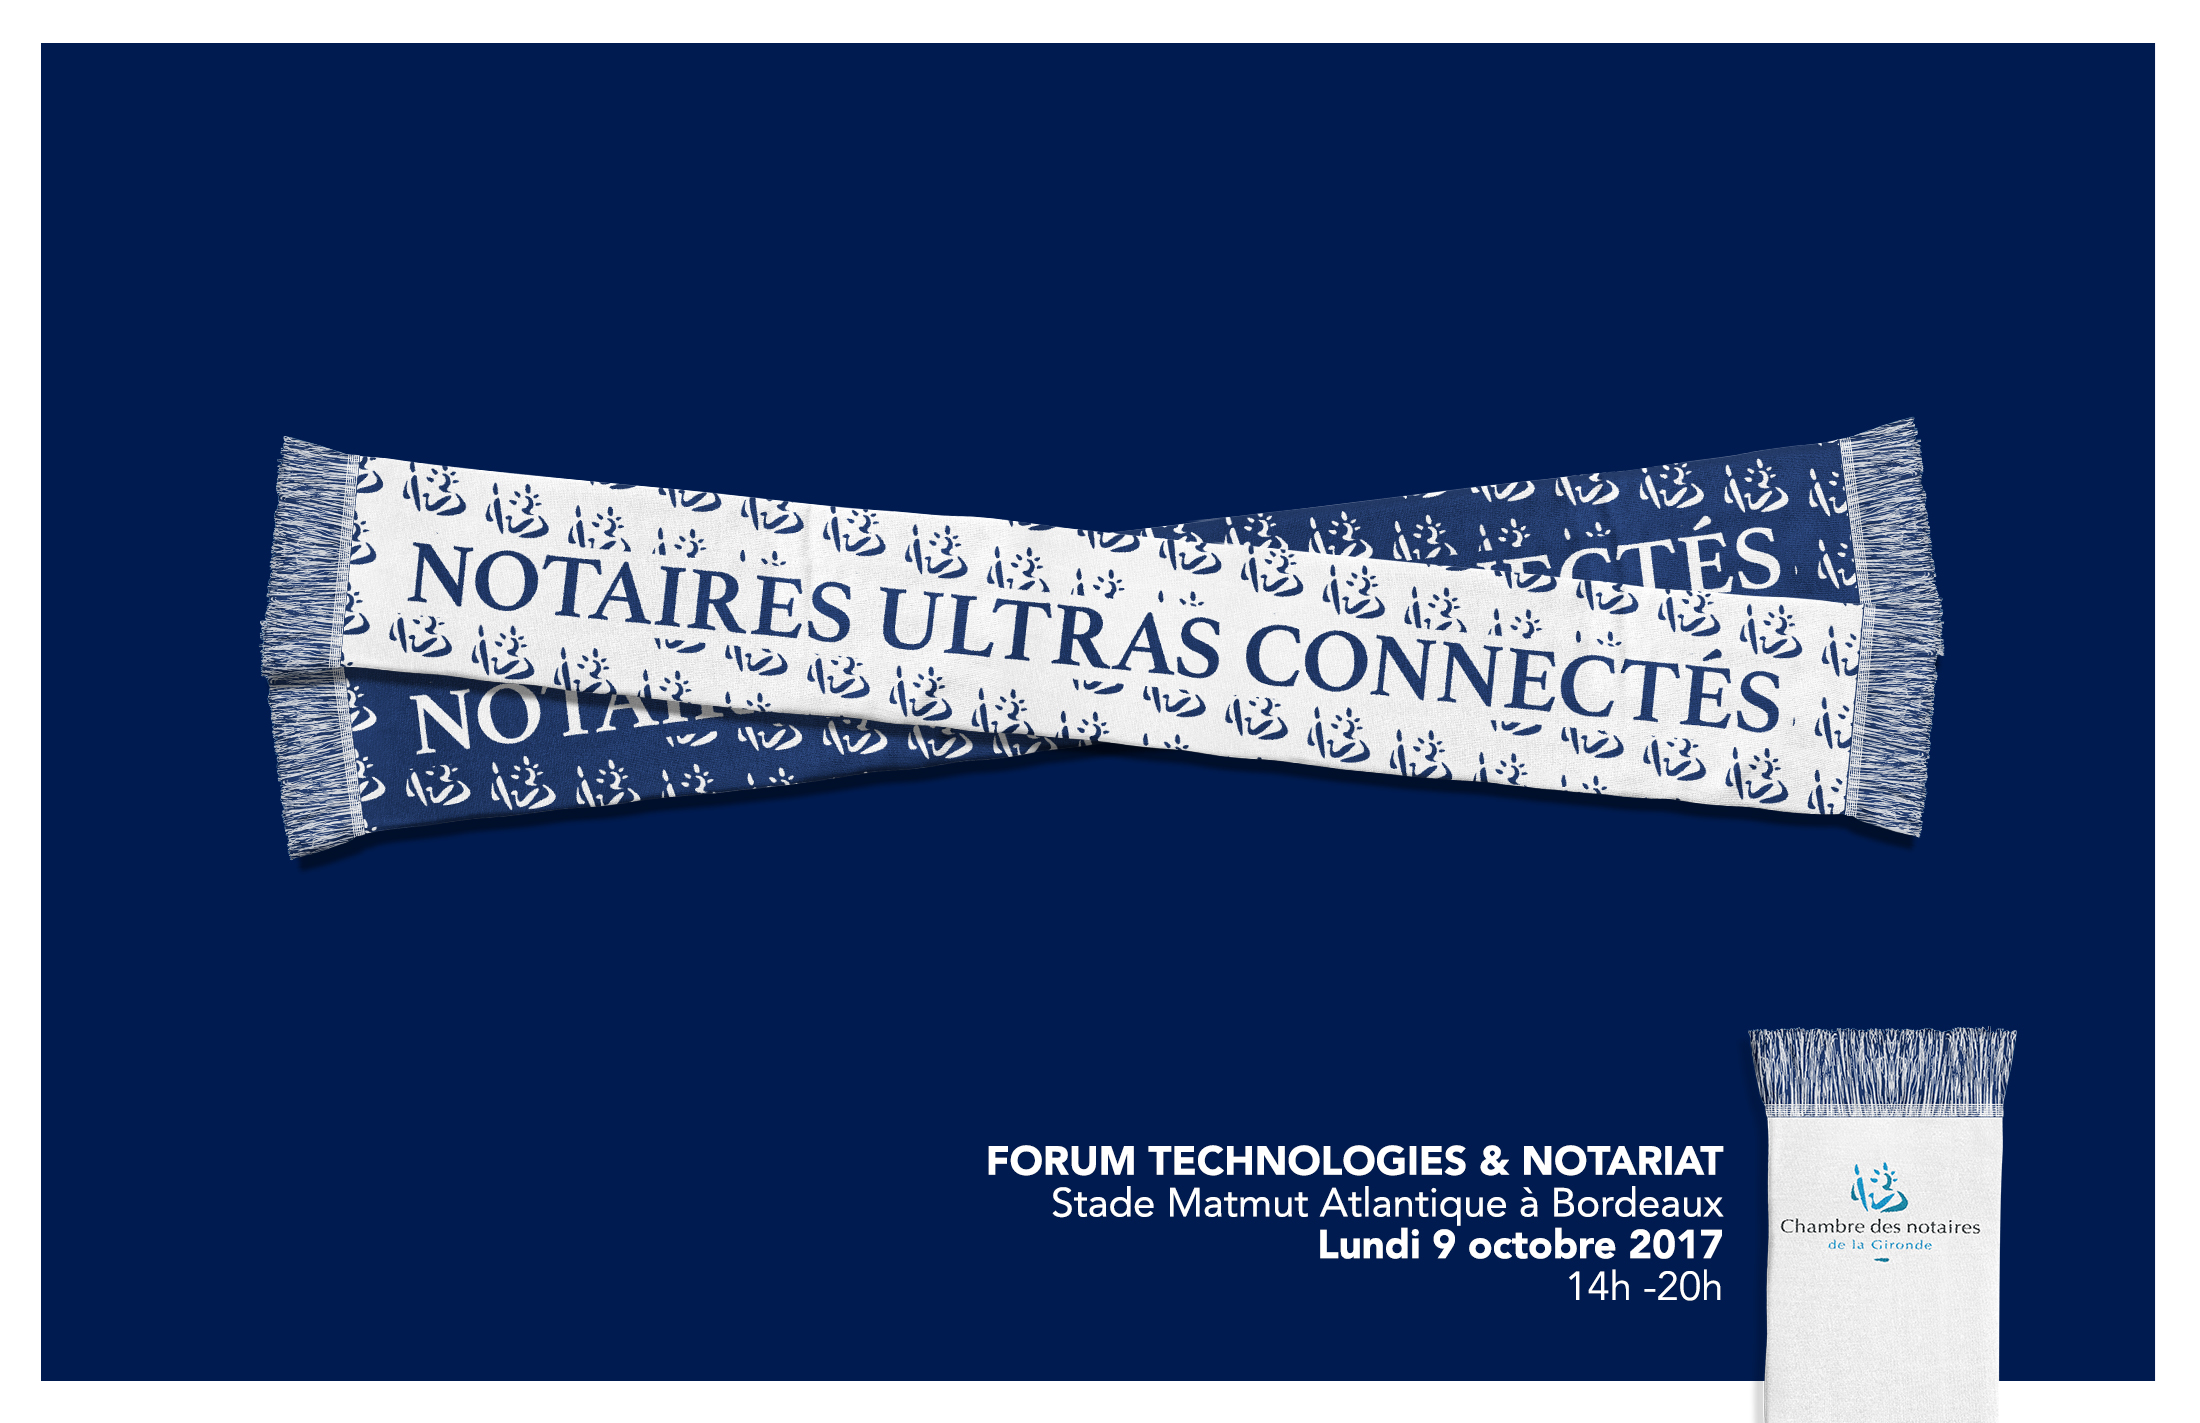 20171002114156-forum-technologies-et-notariat-614b70dc6b7ec671686273.jpg